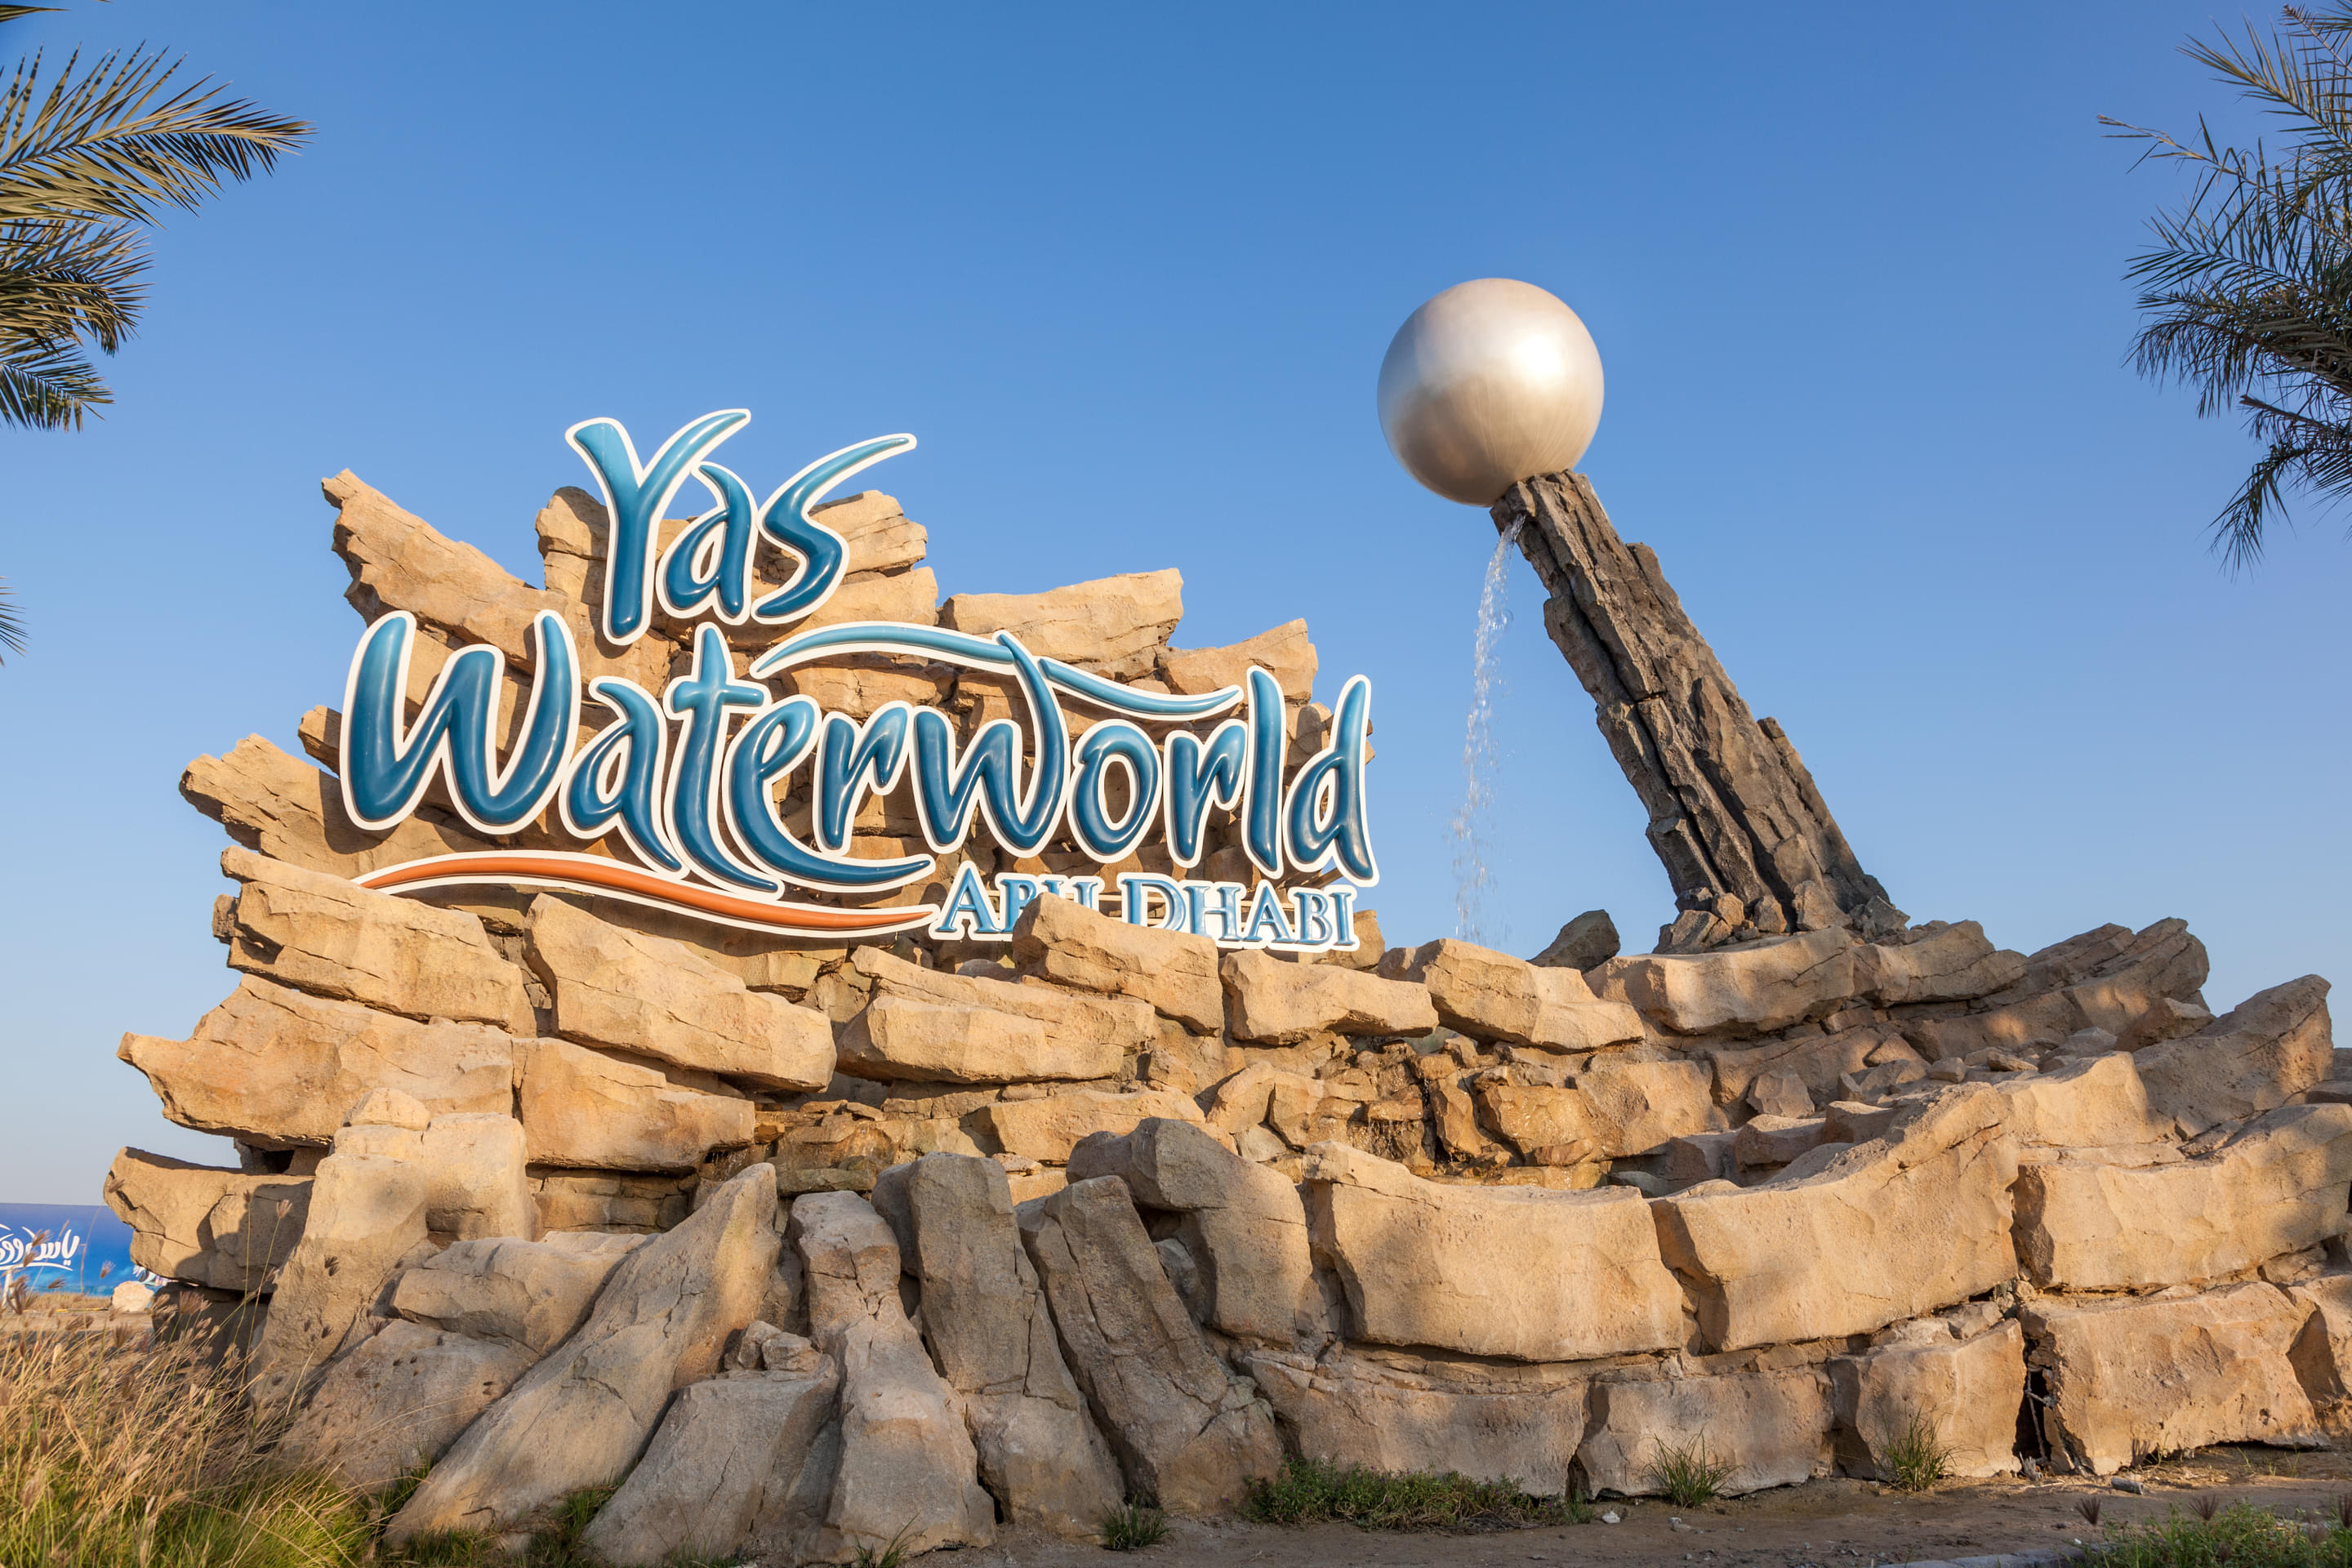 Yas Waterworld Overview